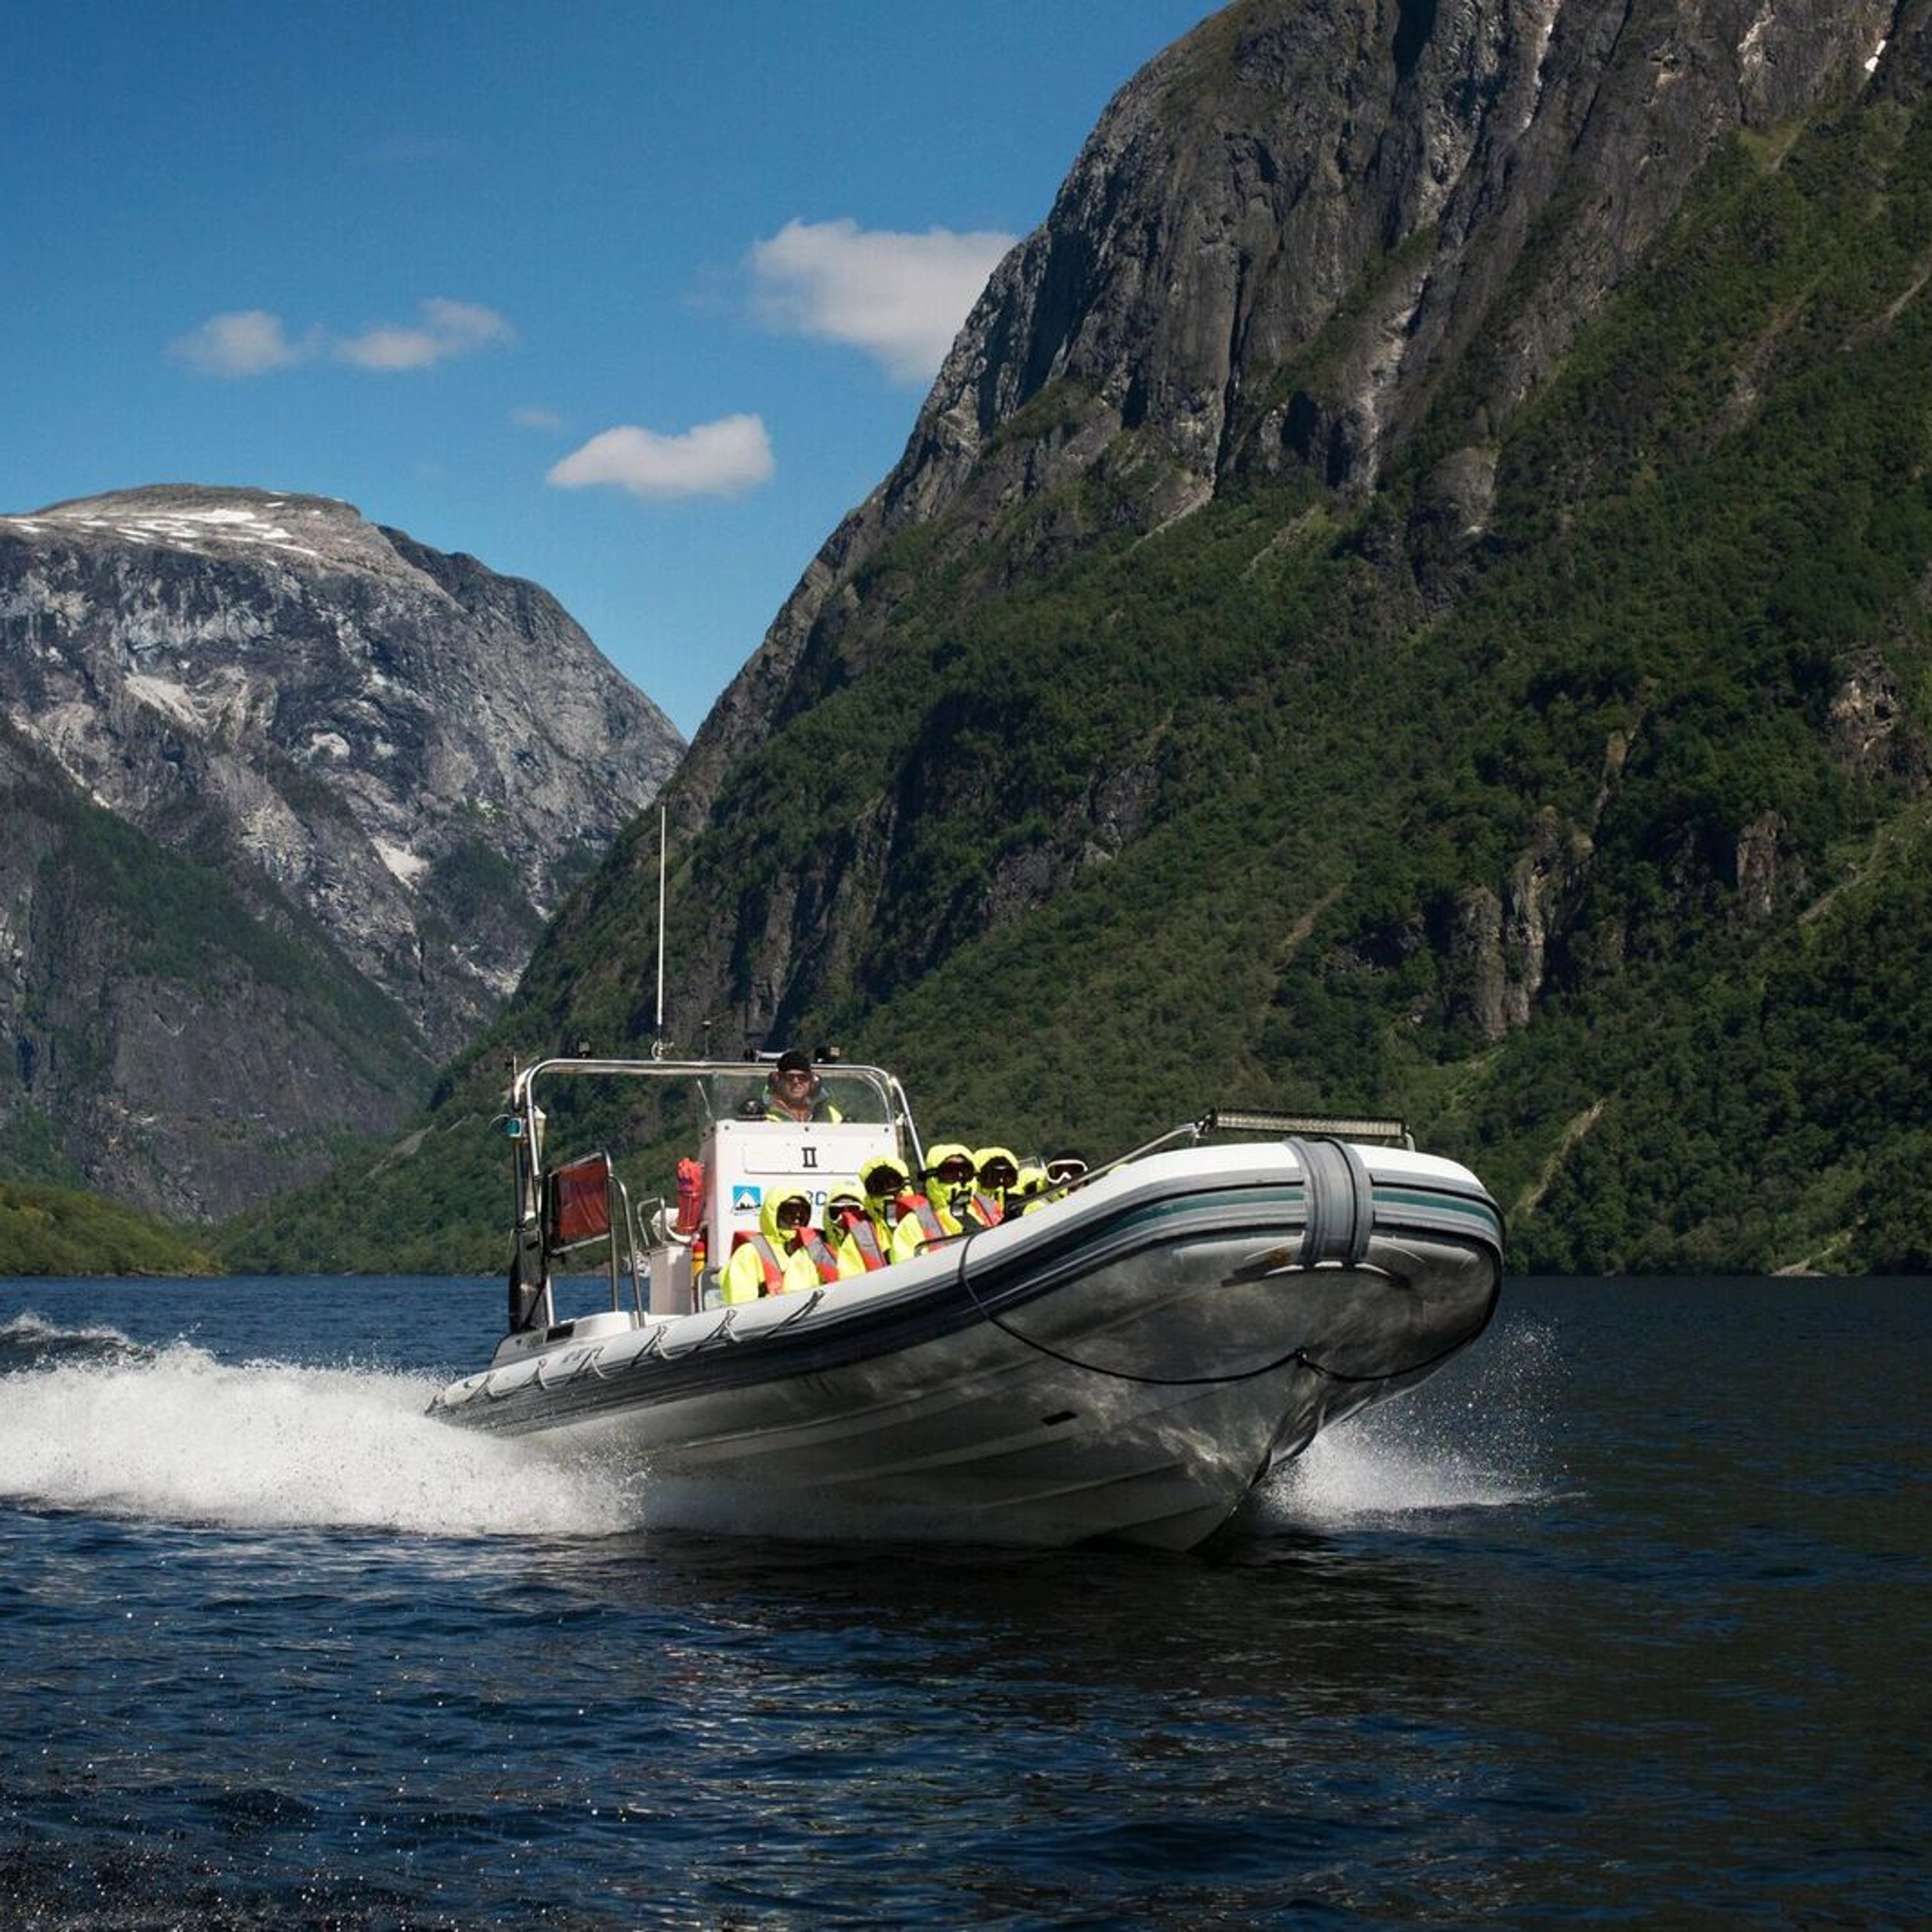 High speed on the Nærøyfjord - Heritage RIB boat tour in Flåm, Norway